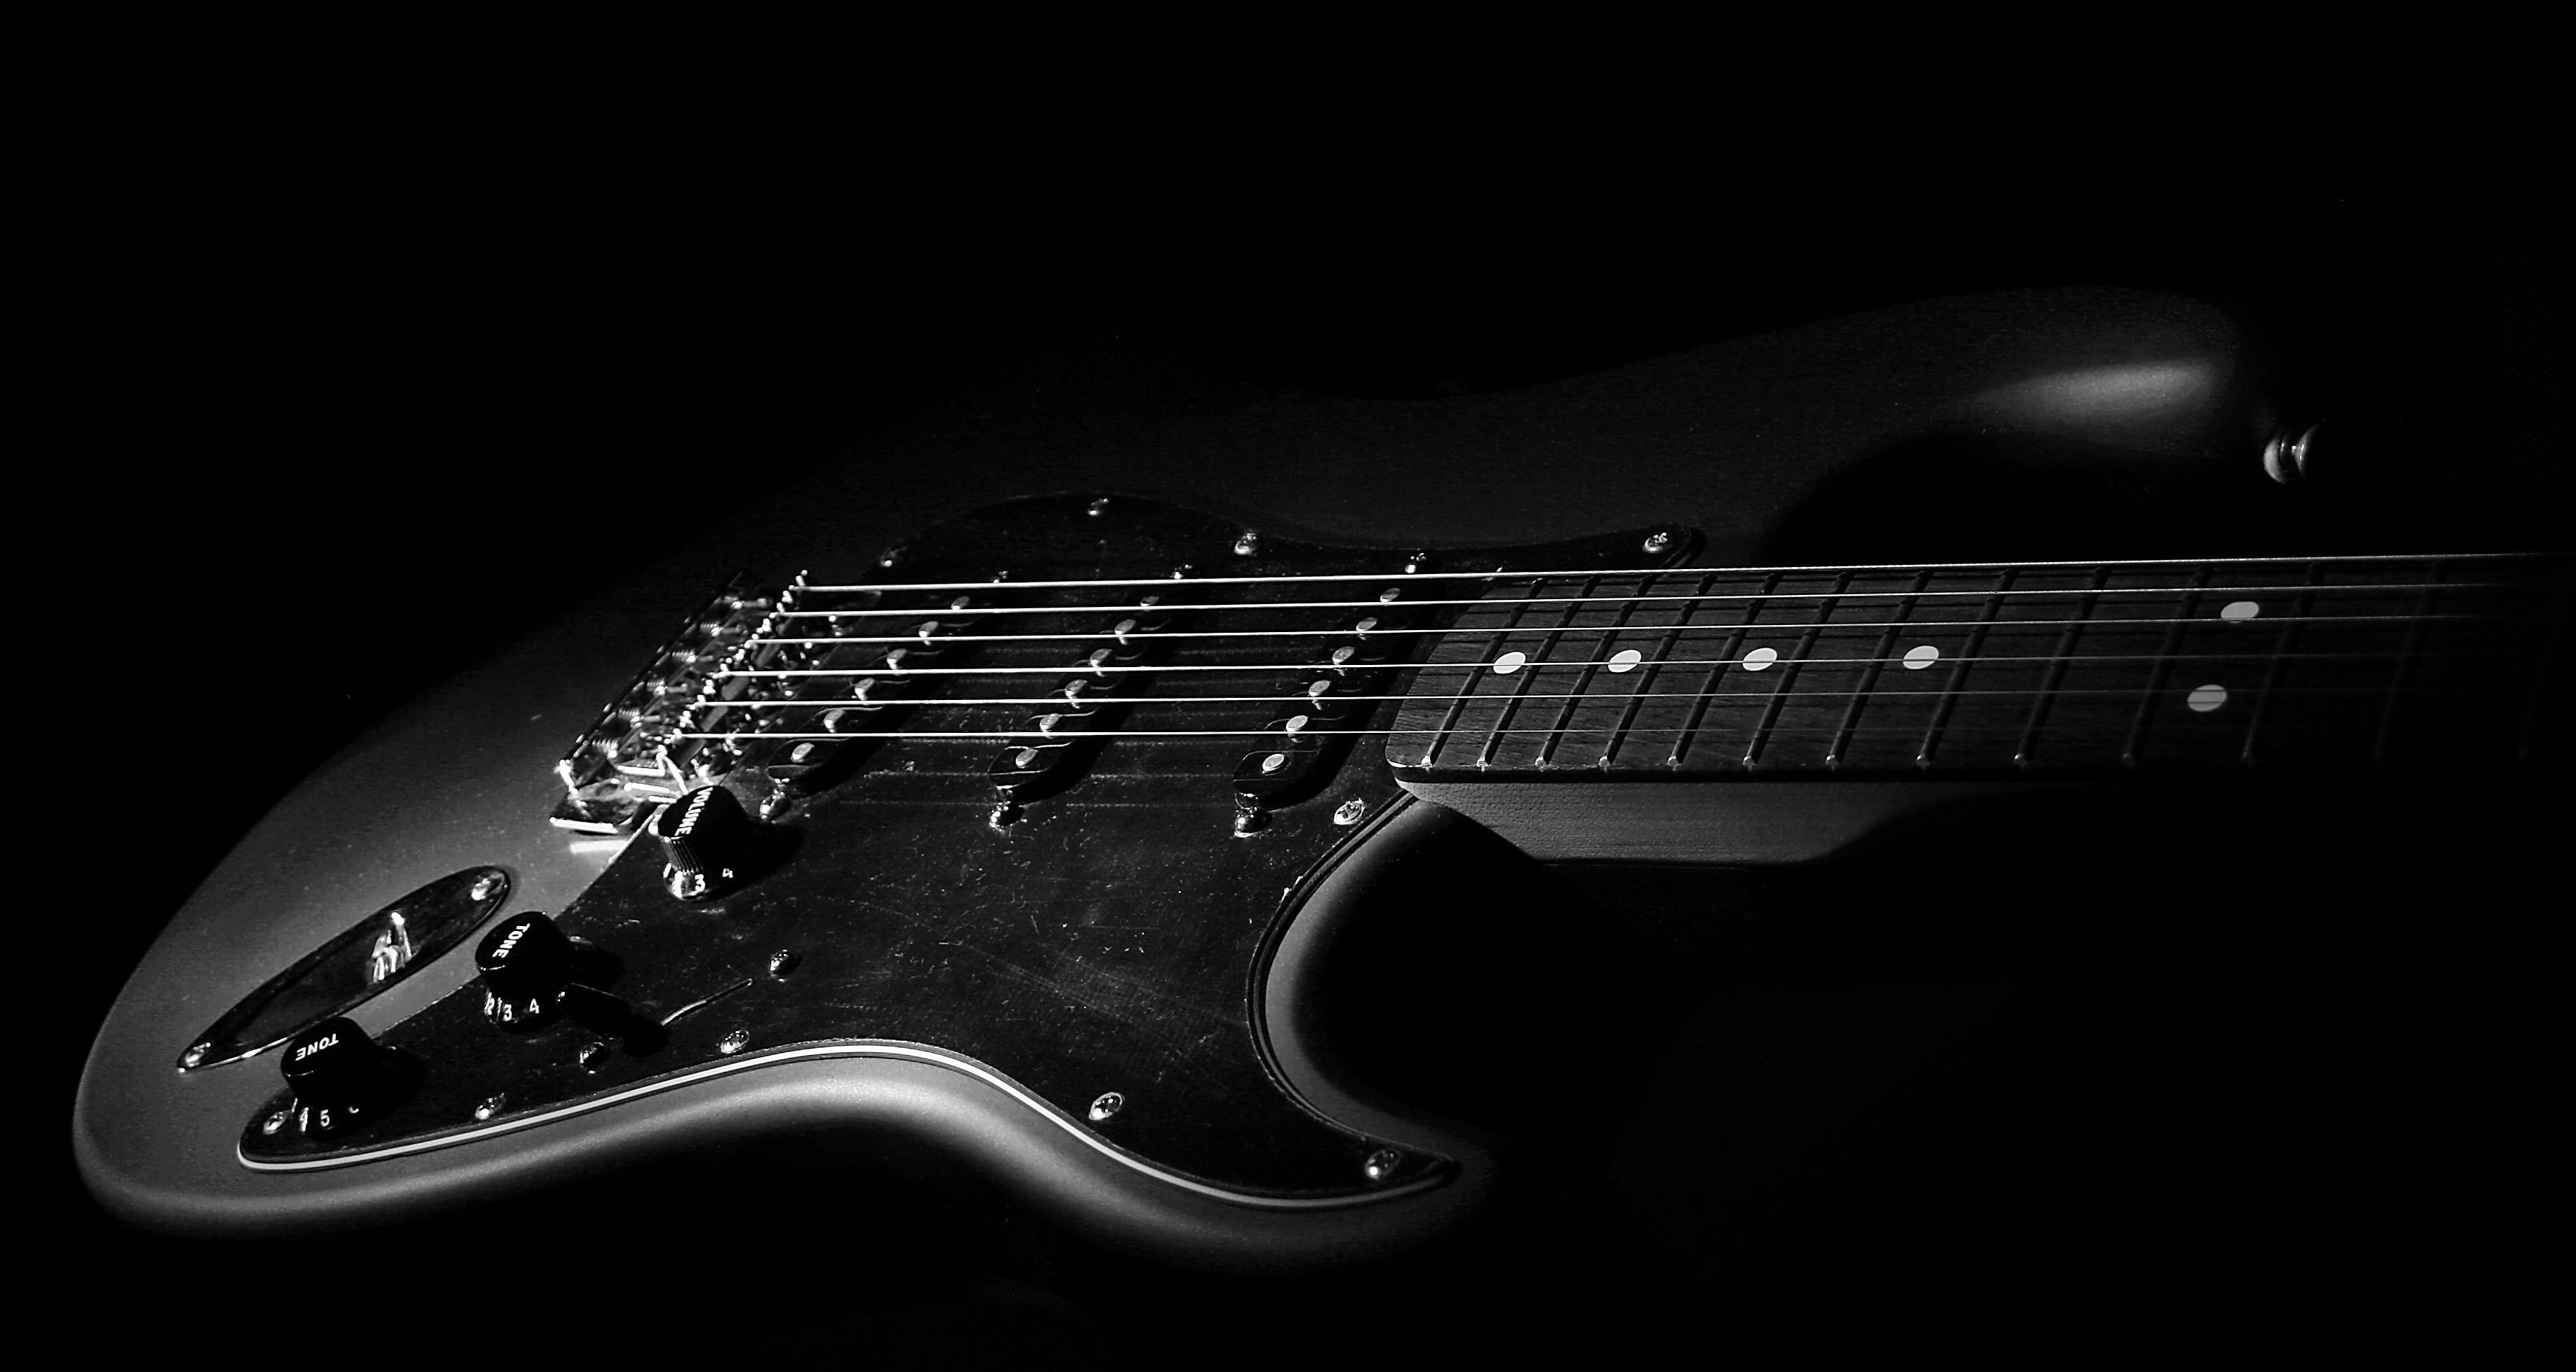 Fender Stratocaster Wallpaper HD Image